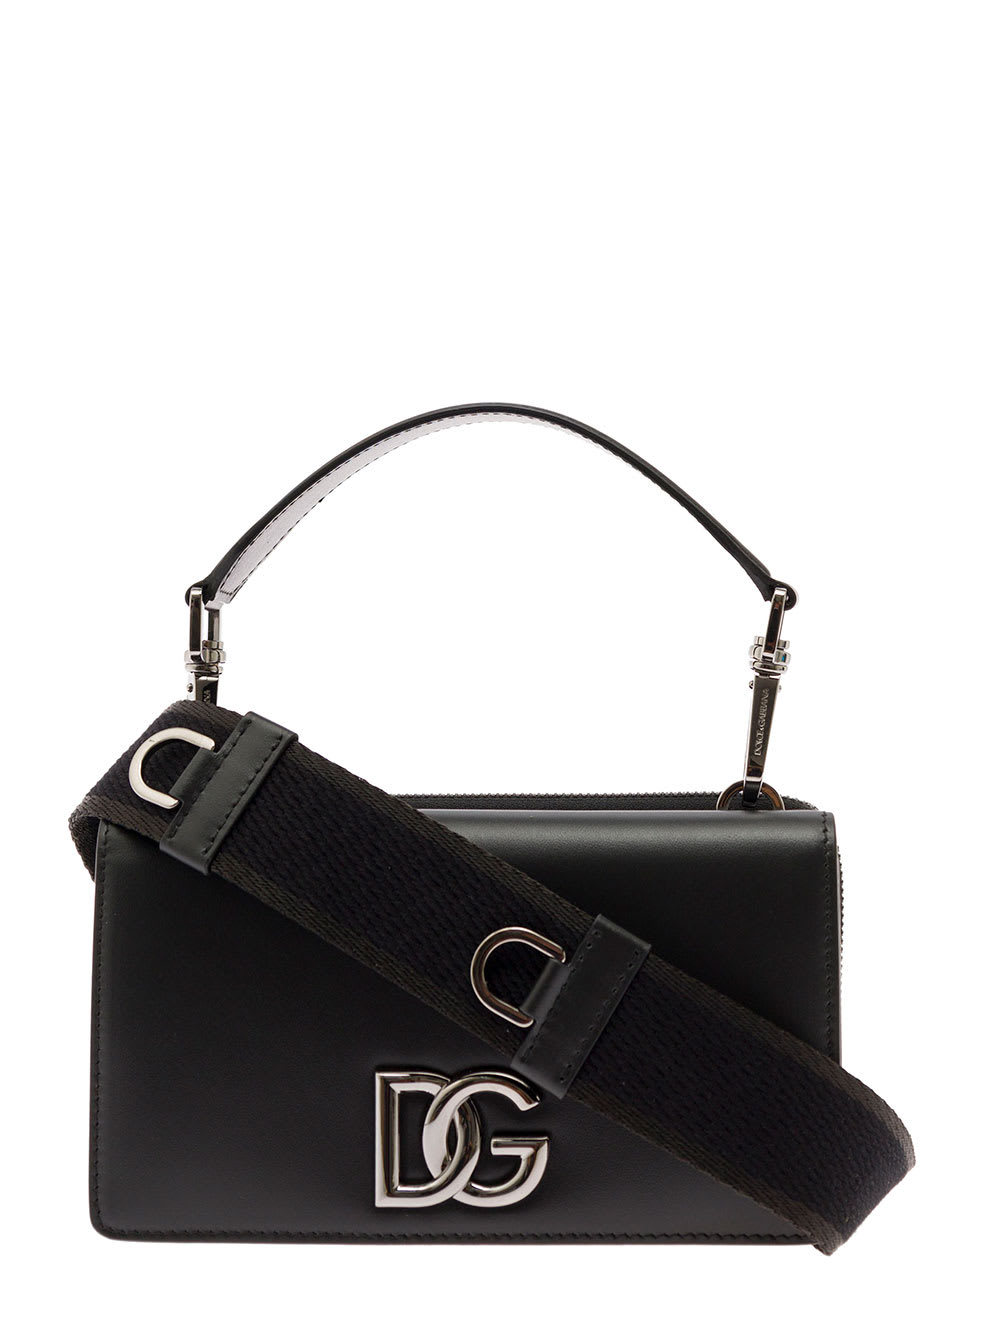 Black Leather Mini Handbag With Shoulder Strap And Logo Plaque Dolce & Gabbana Man